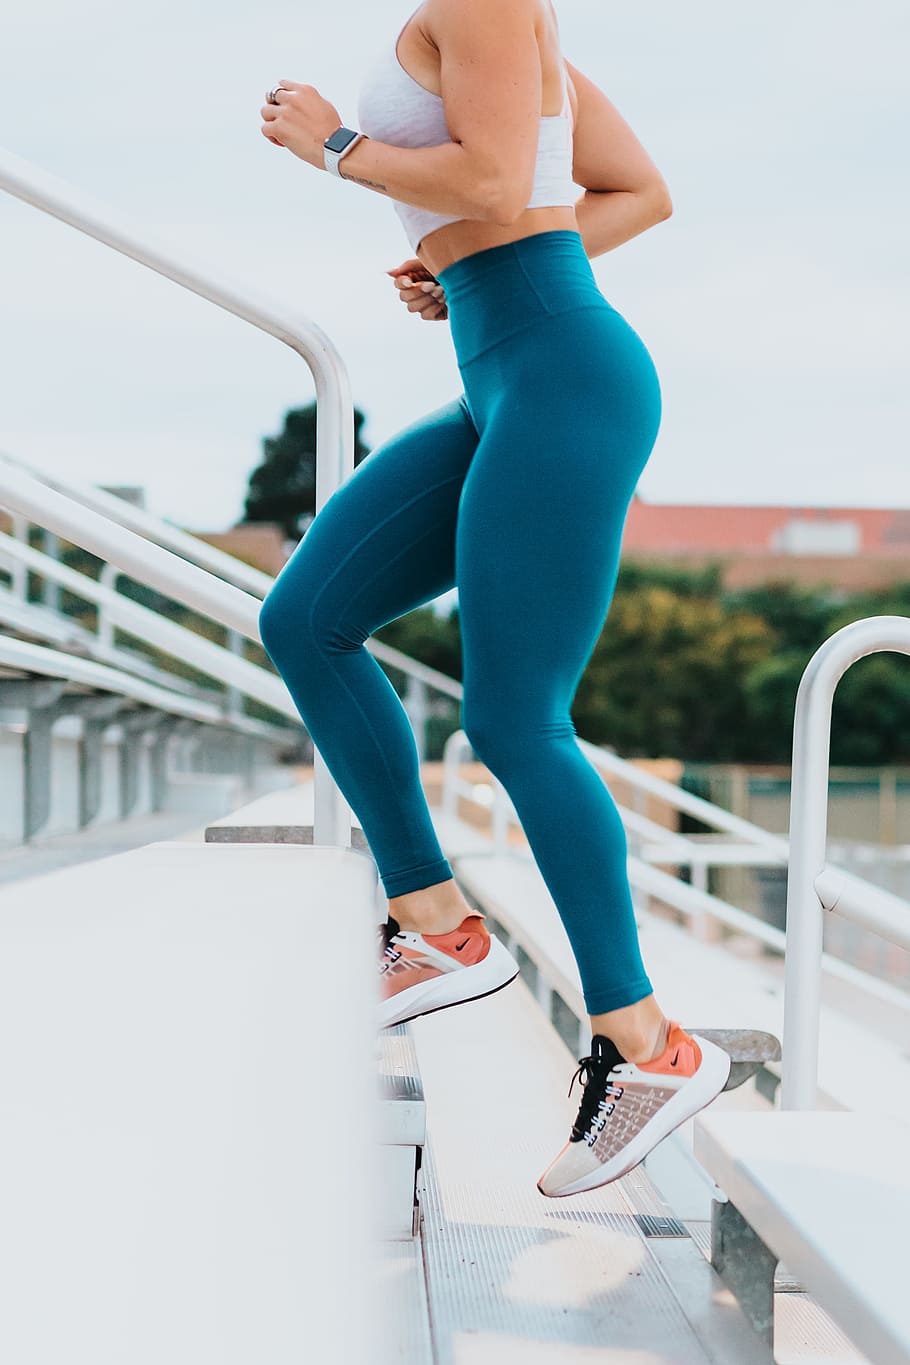 woman running on stairs, female, legs, steps, bleachers, exercise